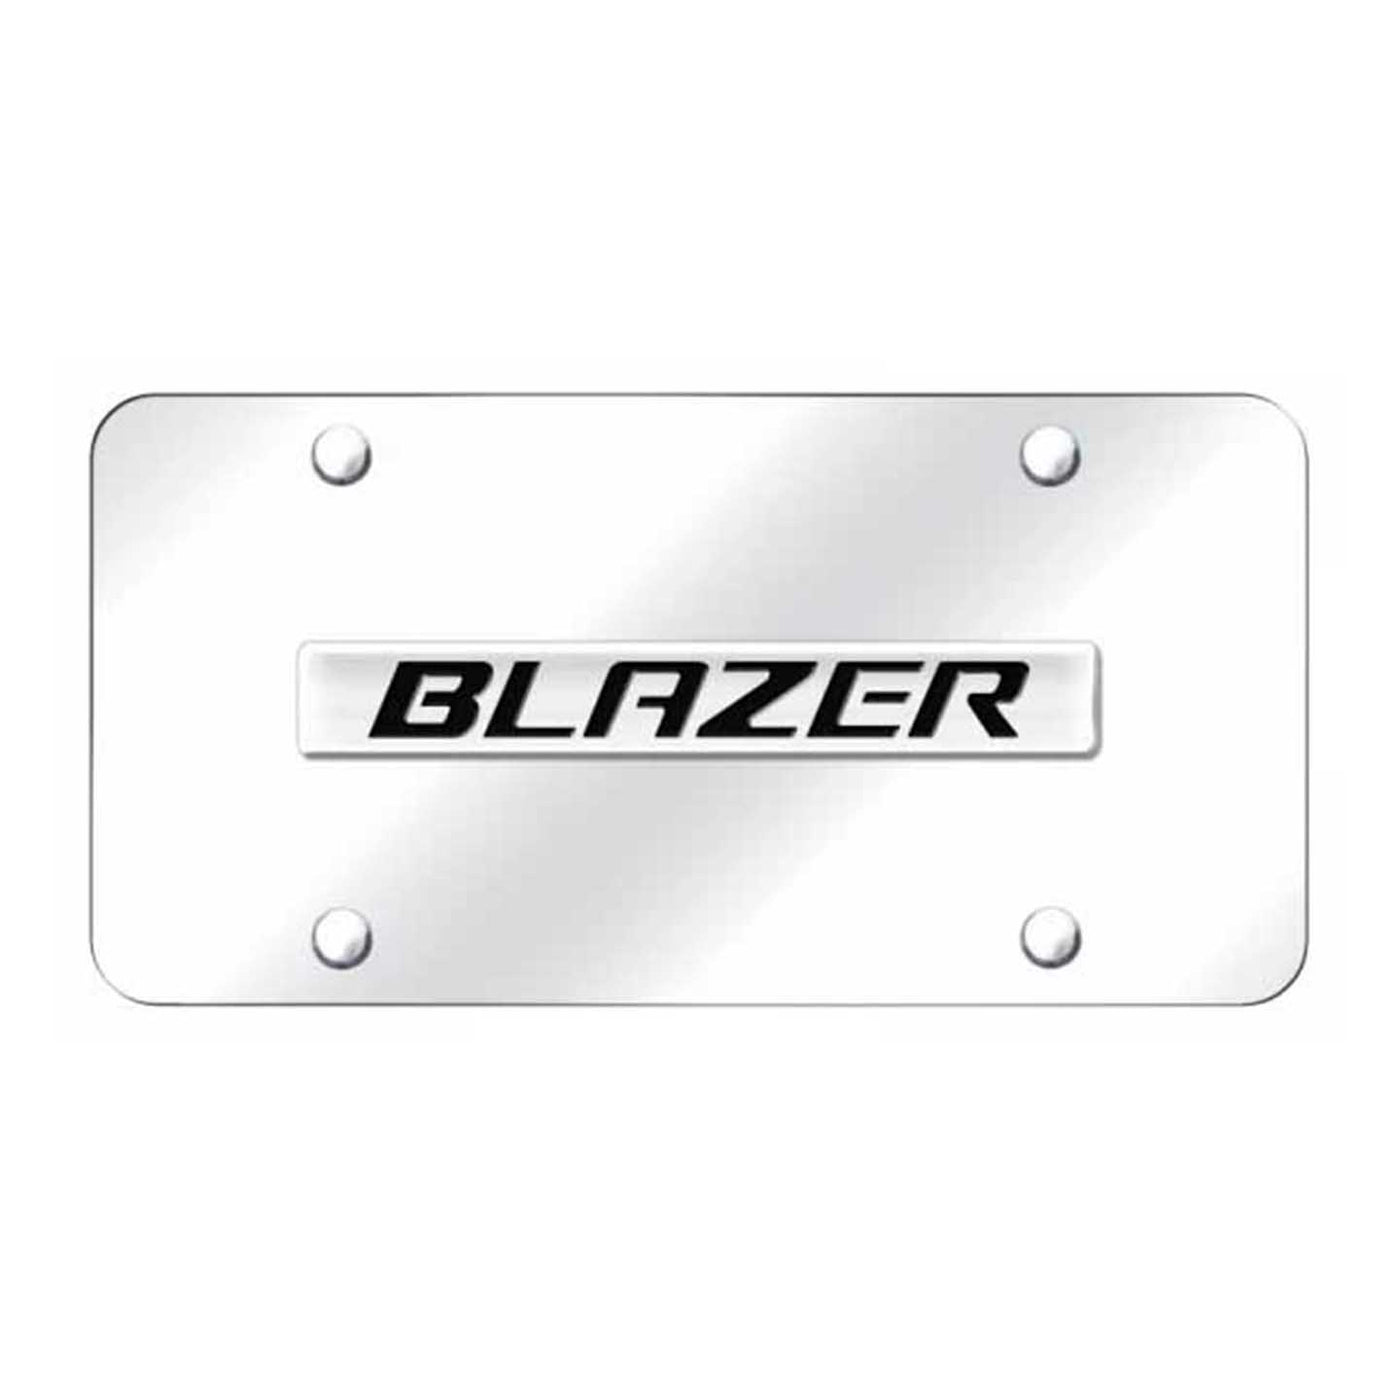 Blazer Name License Plate - Chrome on Mirrored